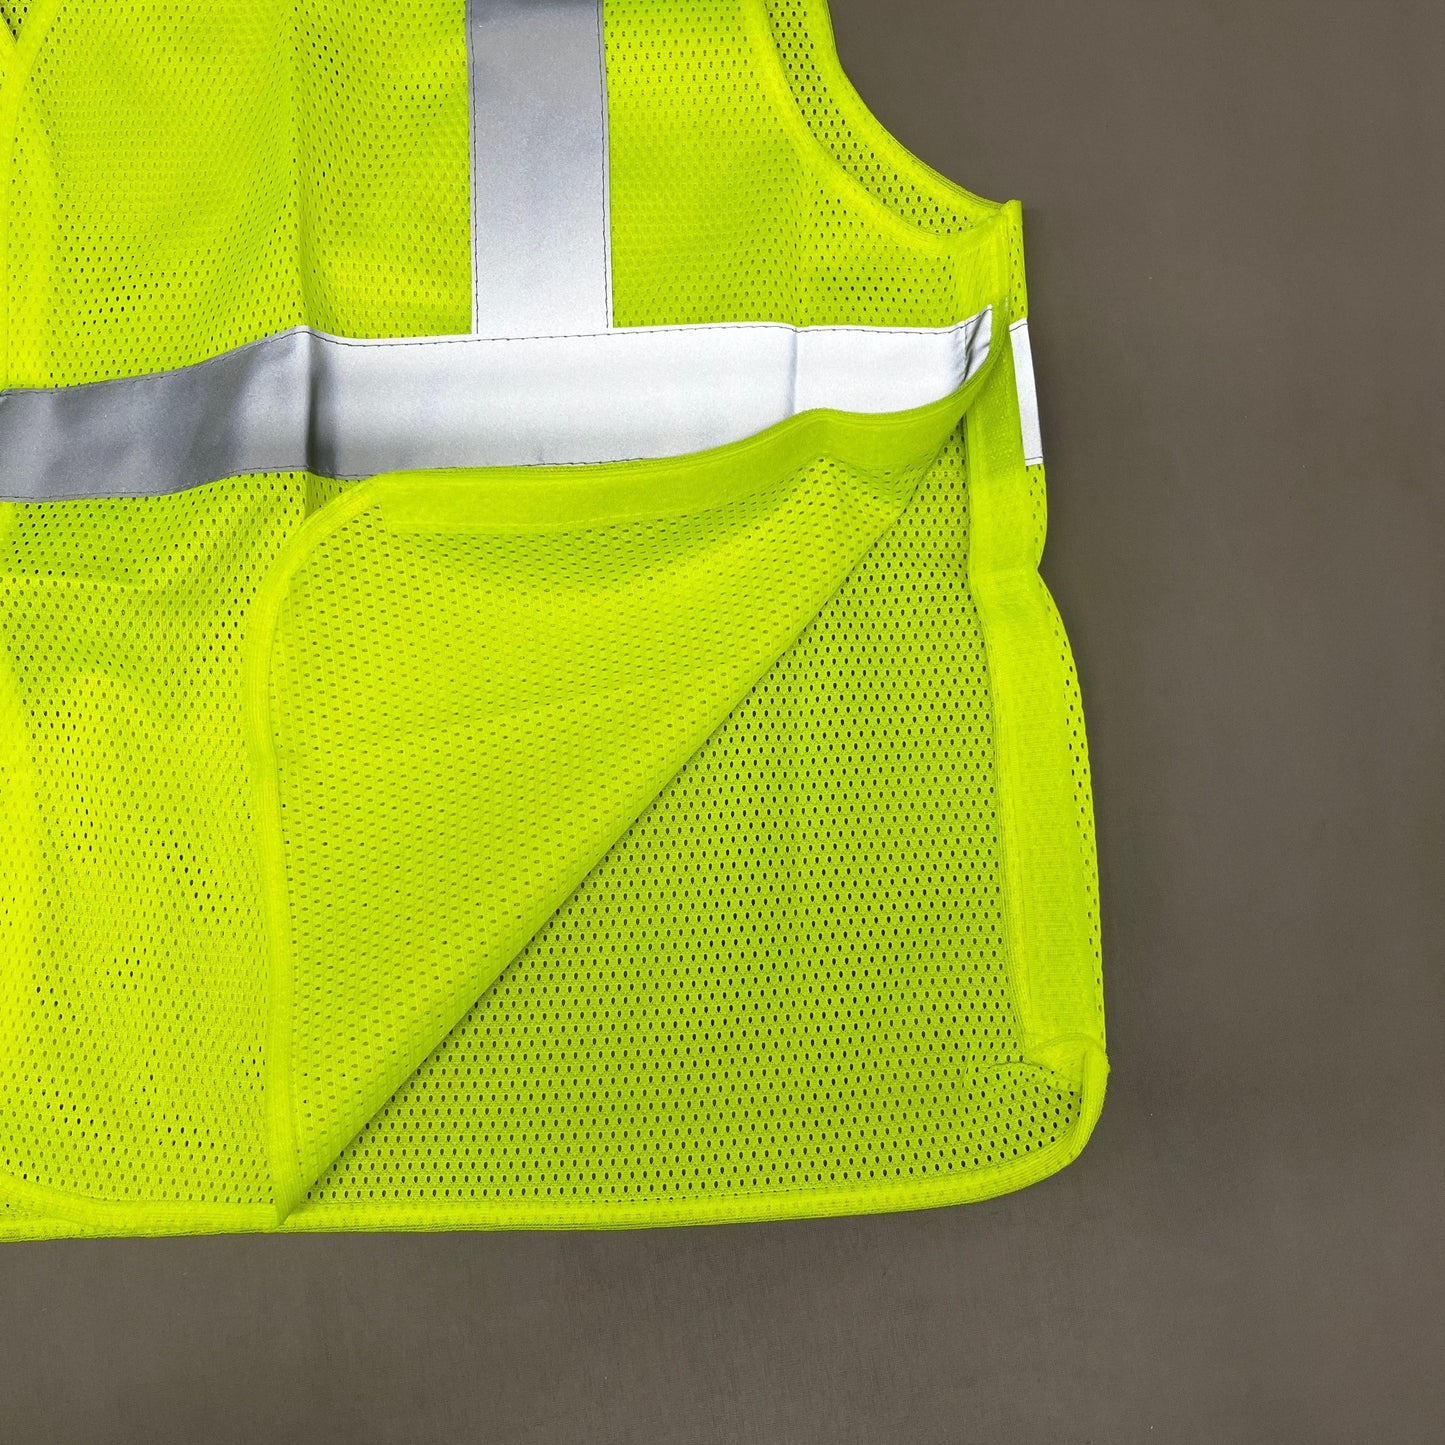 Chief Miller Employee Apparel ASN INC Yellow Reflective Safety Vest Unisex Sz-2XL Neon Yellow 1409226 (New) Apparel